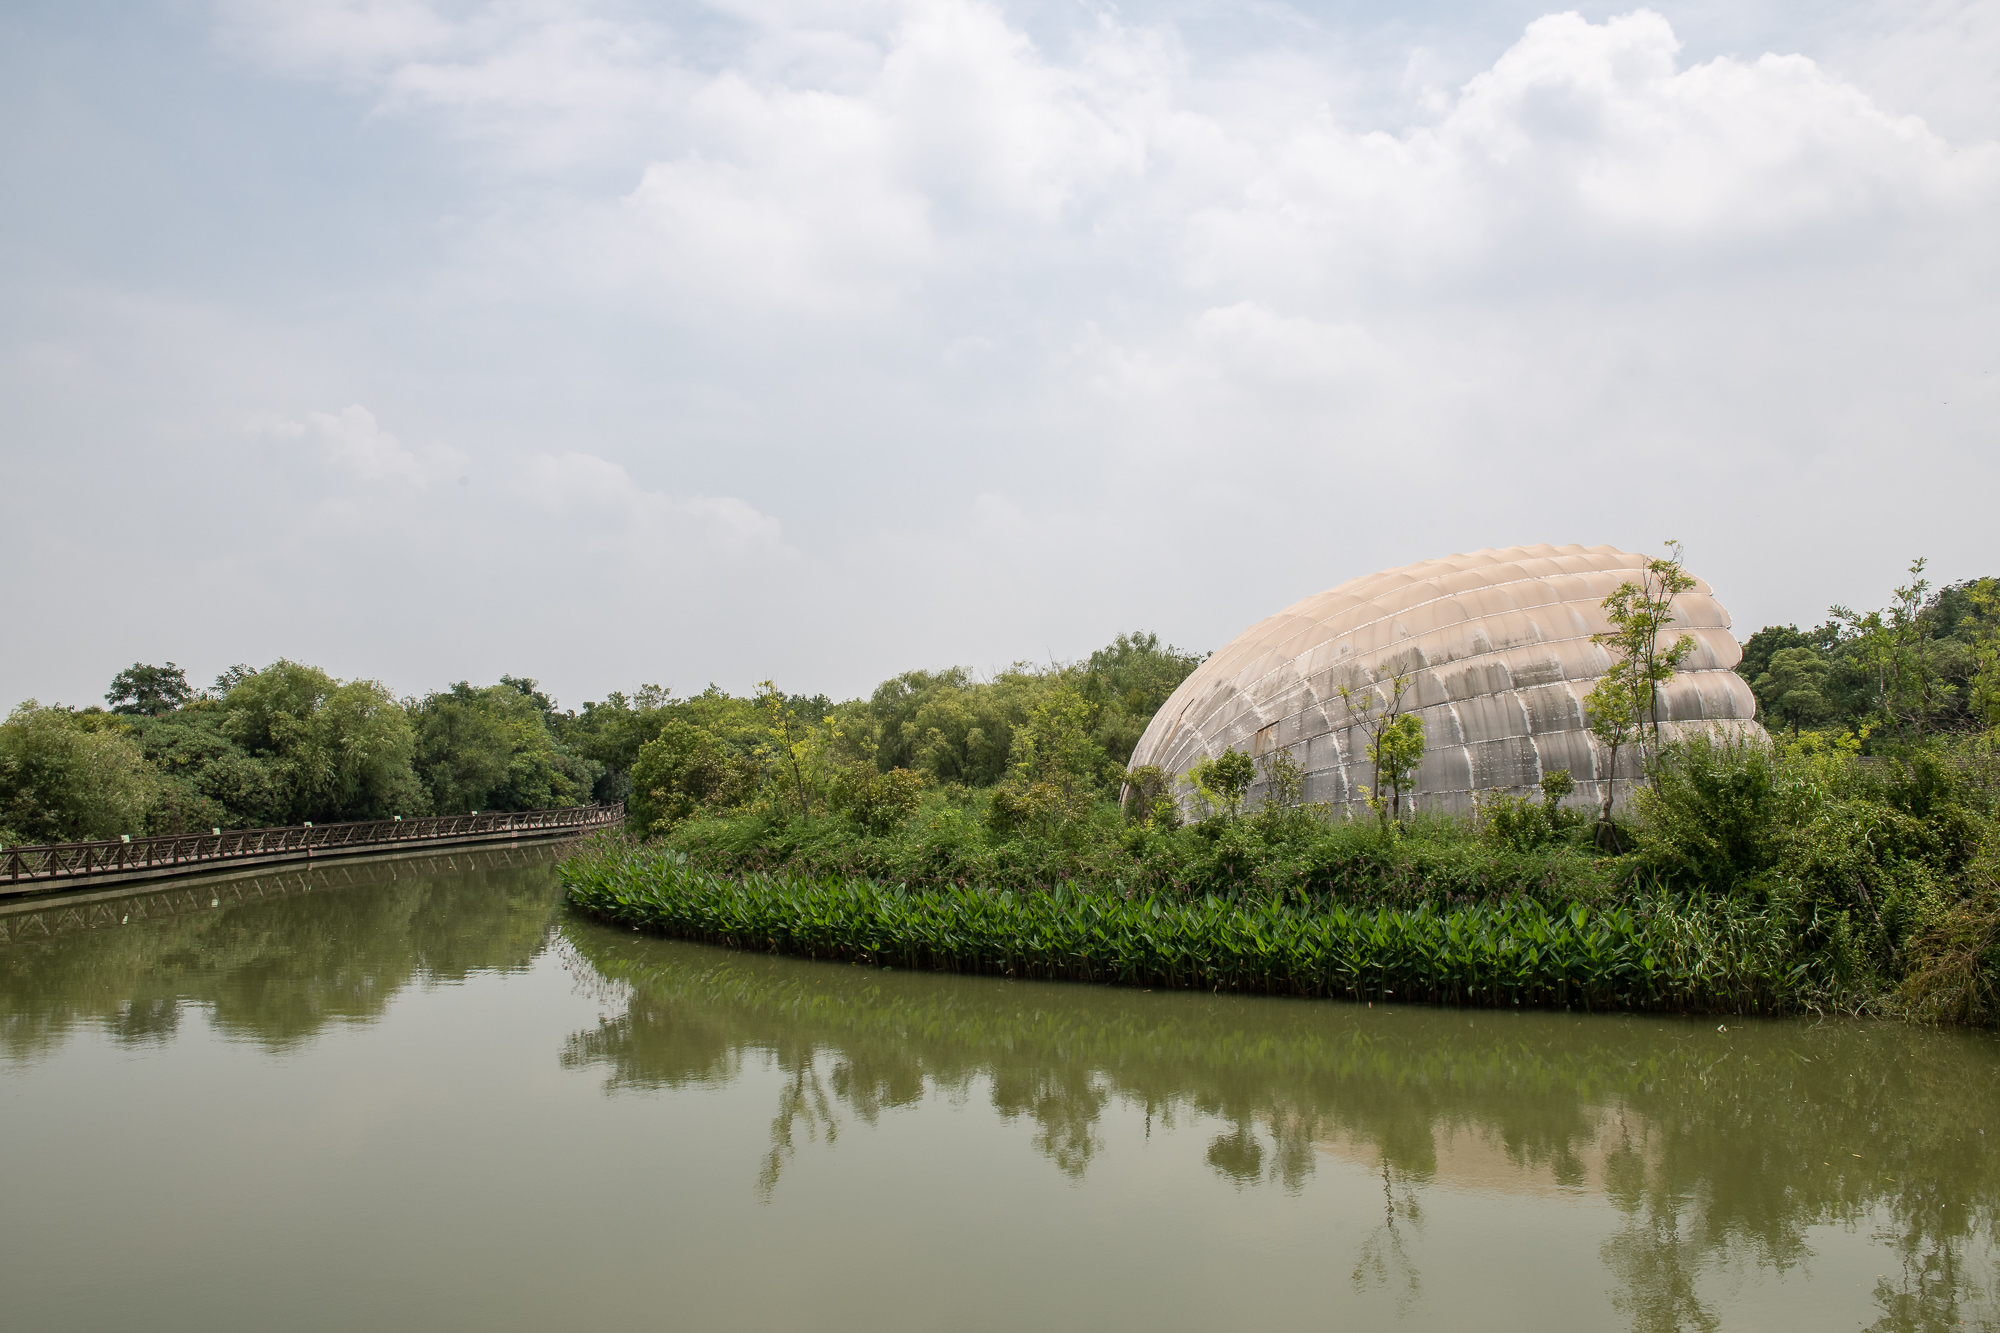 Architektur entlang des Huang Pu River in Shanghai. Reportage und Buchprojekt über den Huangpu River in Shanghai, China.